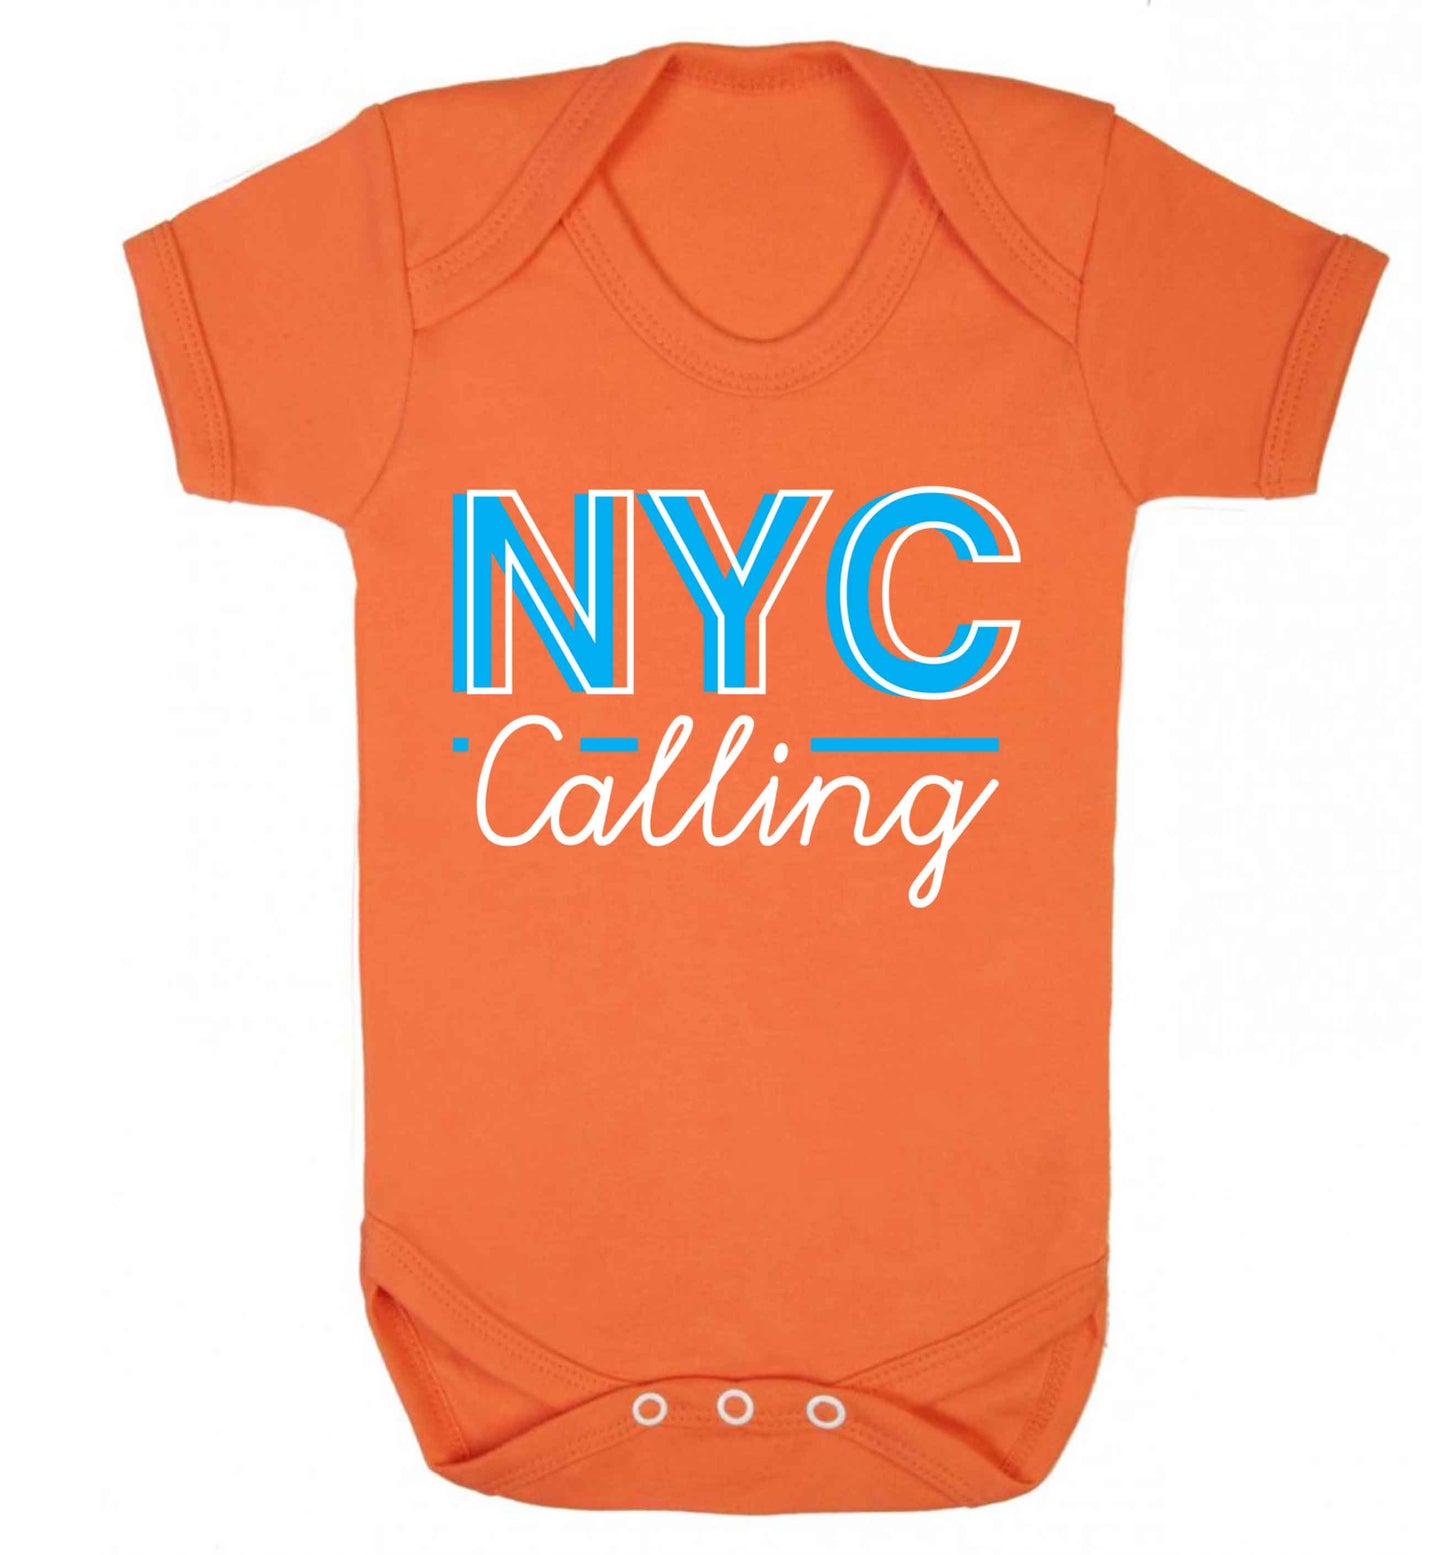 NYC calling Baby Vest orange 18-24 months